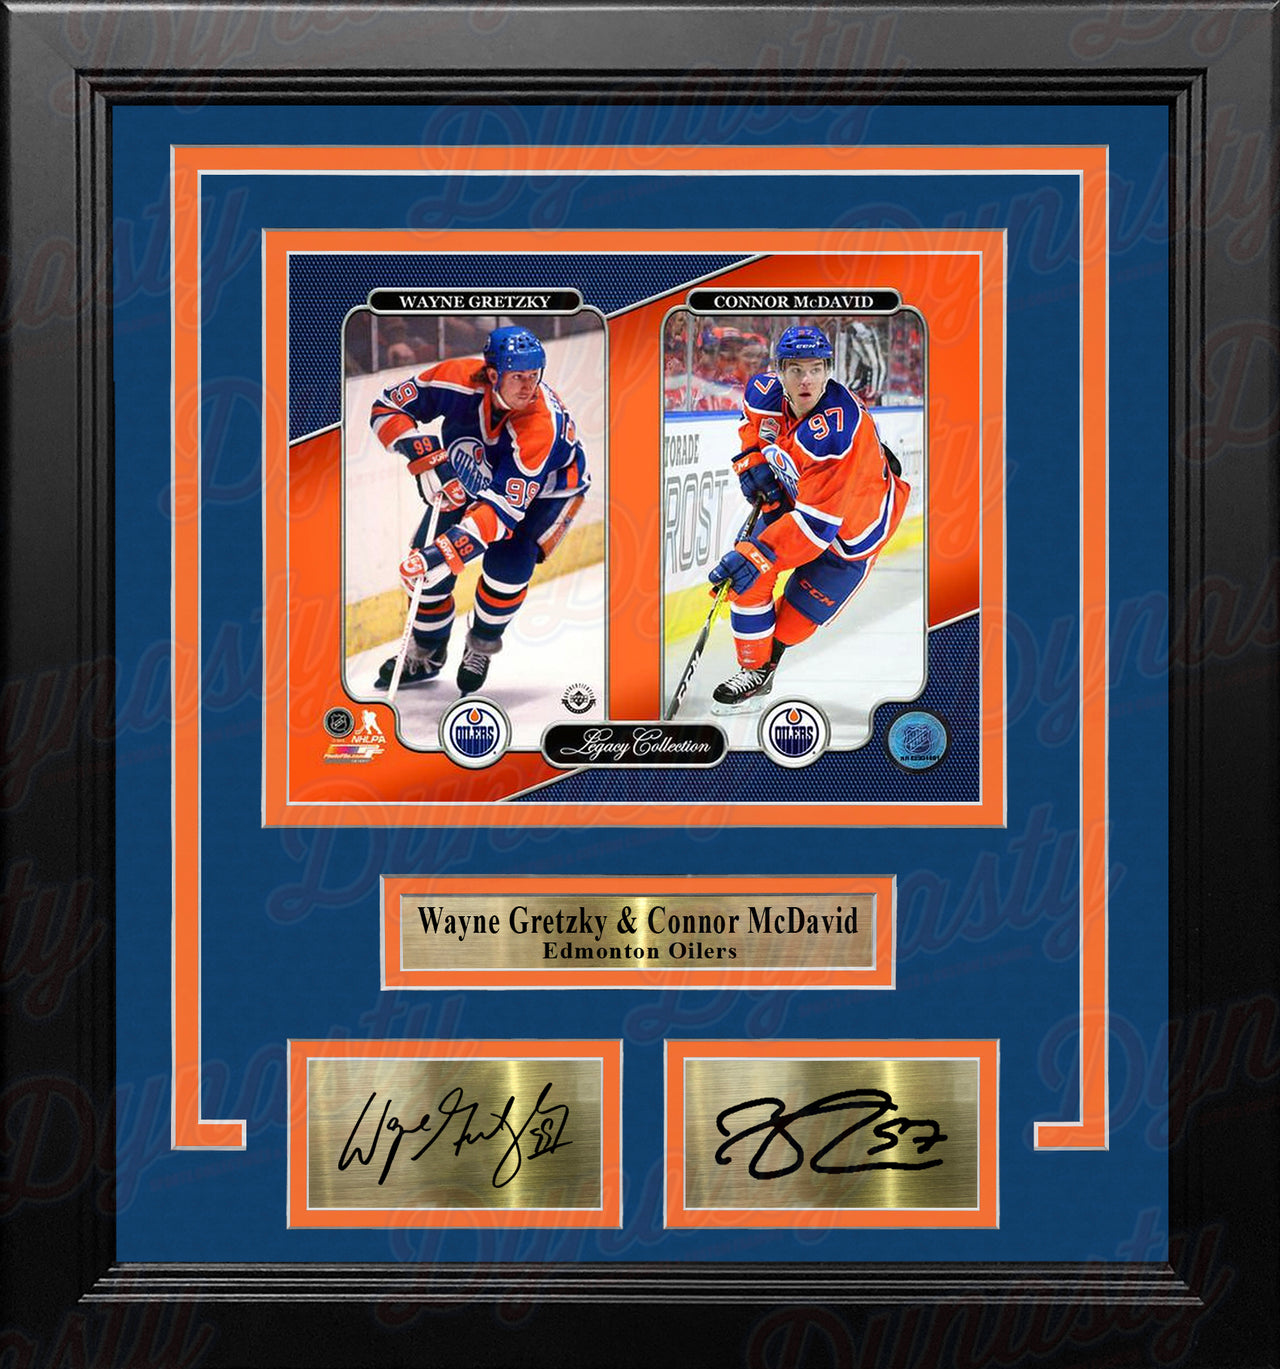 Wayne Gretzky & Connor McDavid Edmonton Oilers 8" x 10" Framed Hockey Photo with Engraved Autographs - Dynasty Sports & Framing 